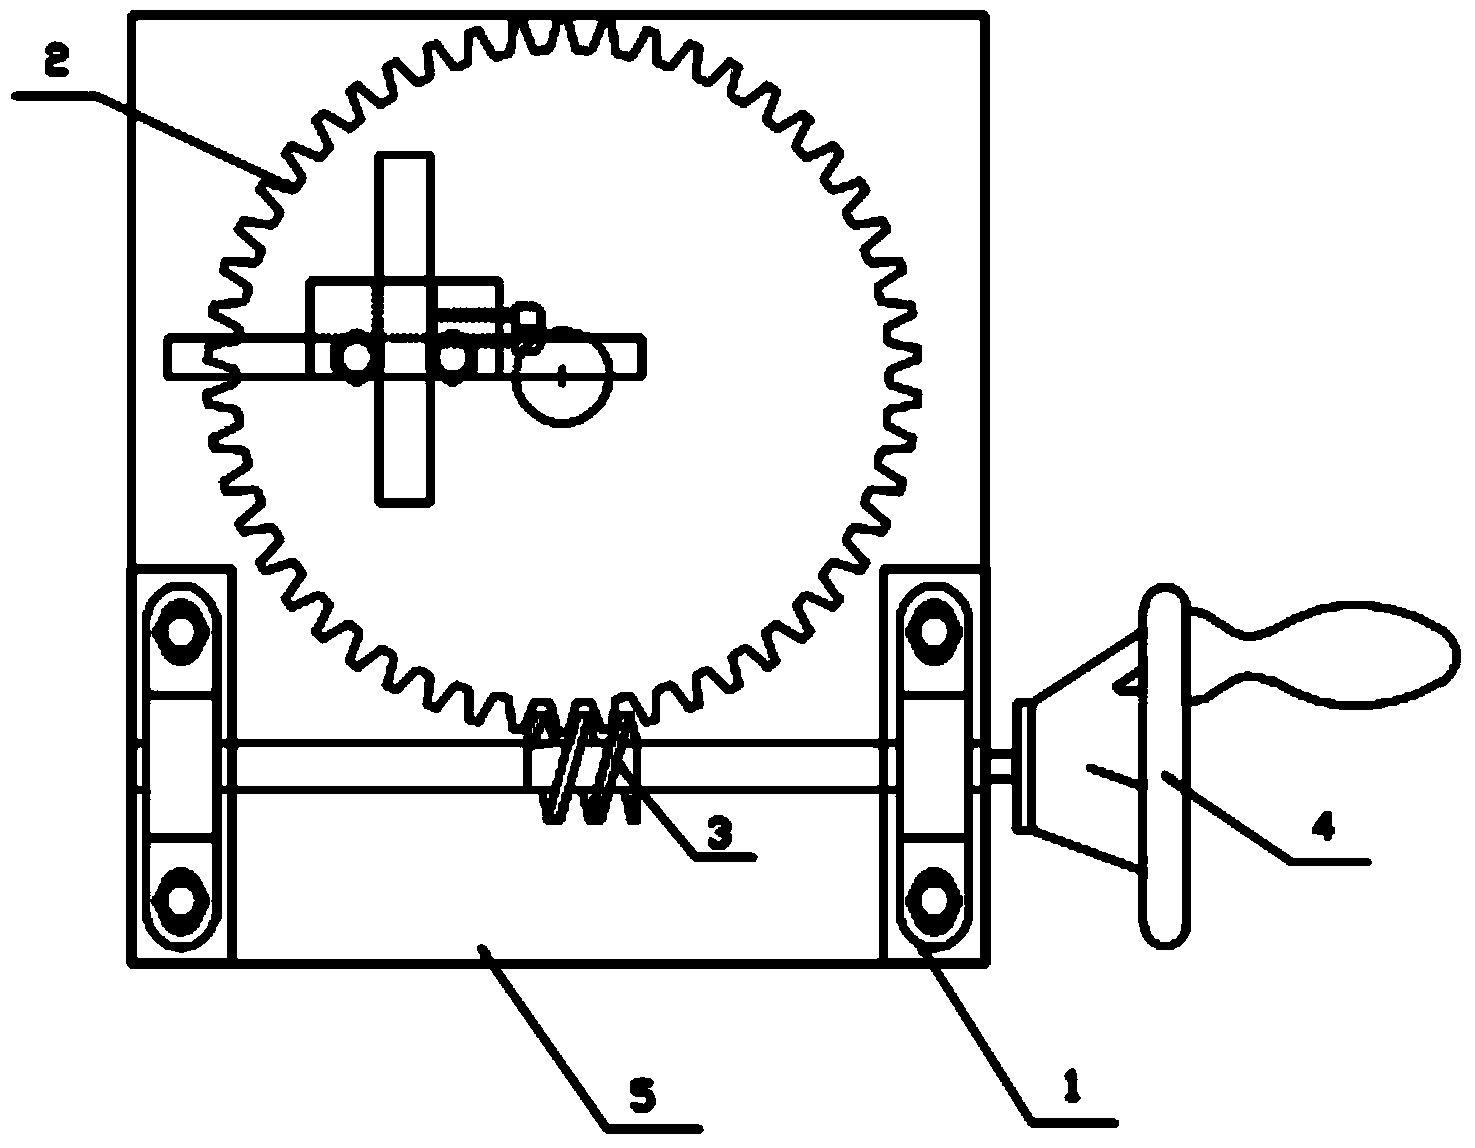 Spherical tetrafluoro bearing processing device and use method of spherical tetrafluoro bearing processing device